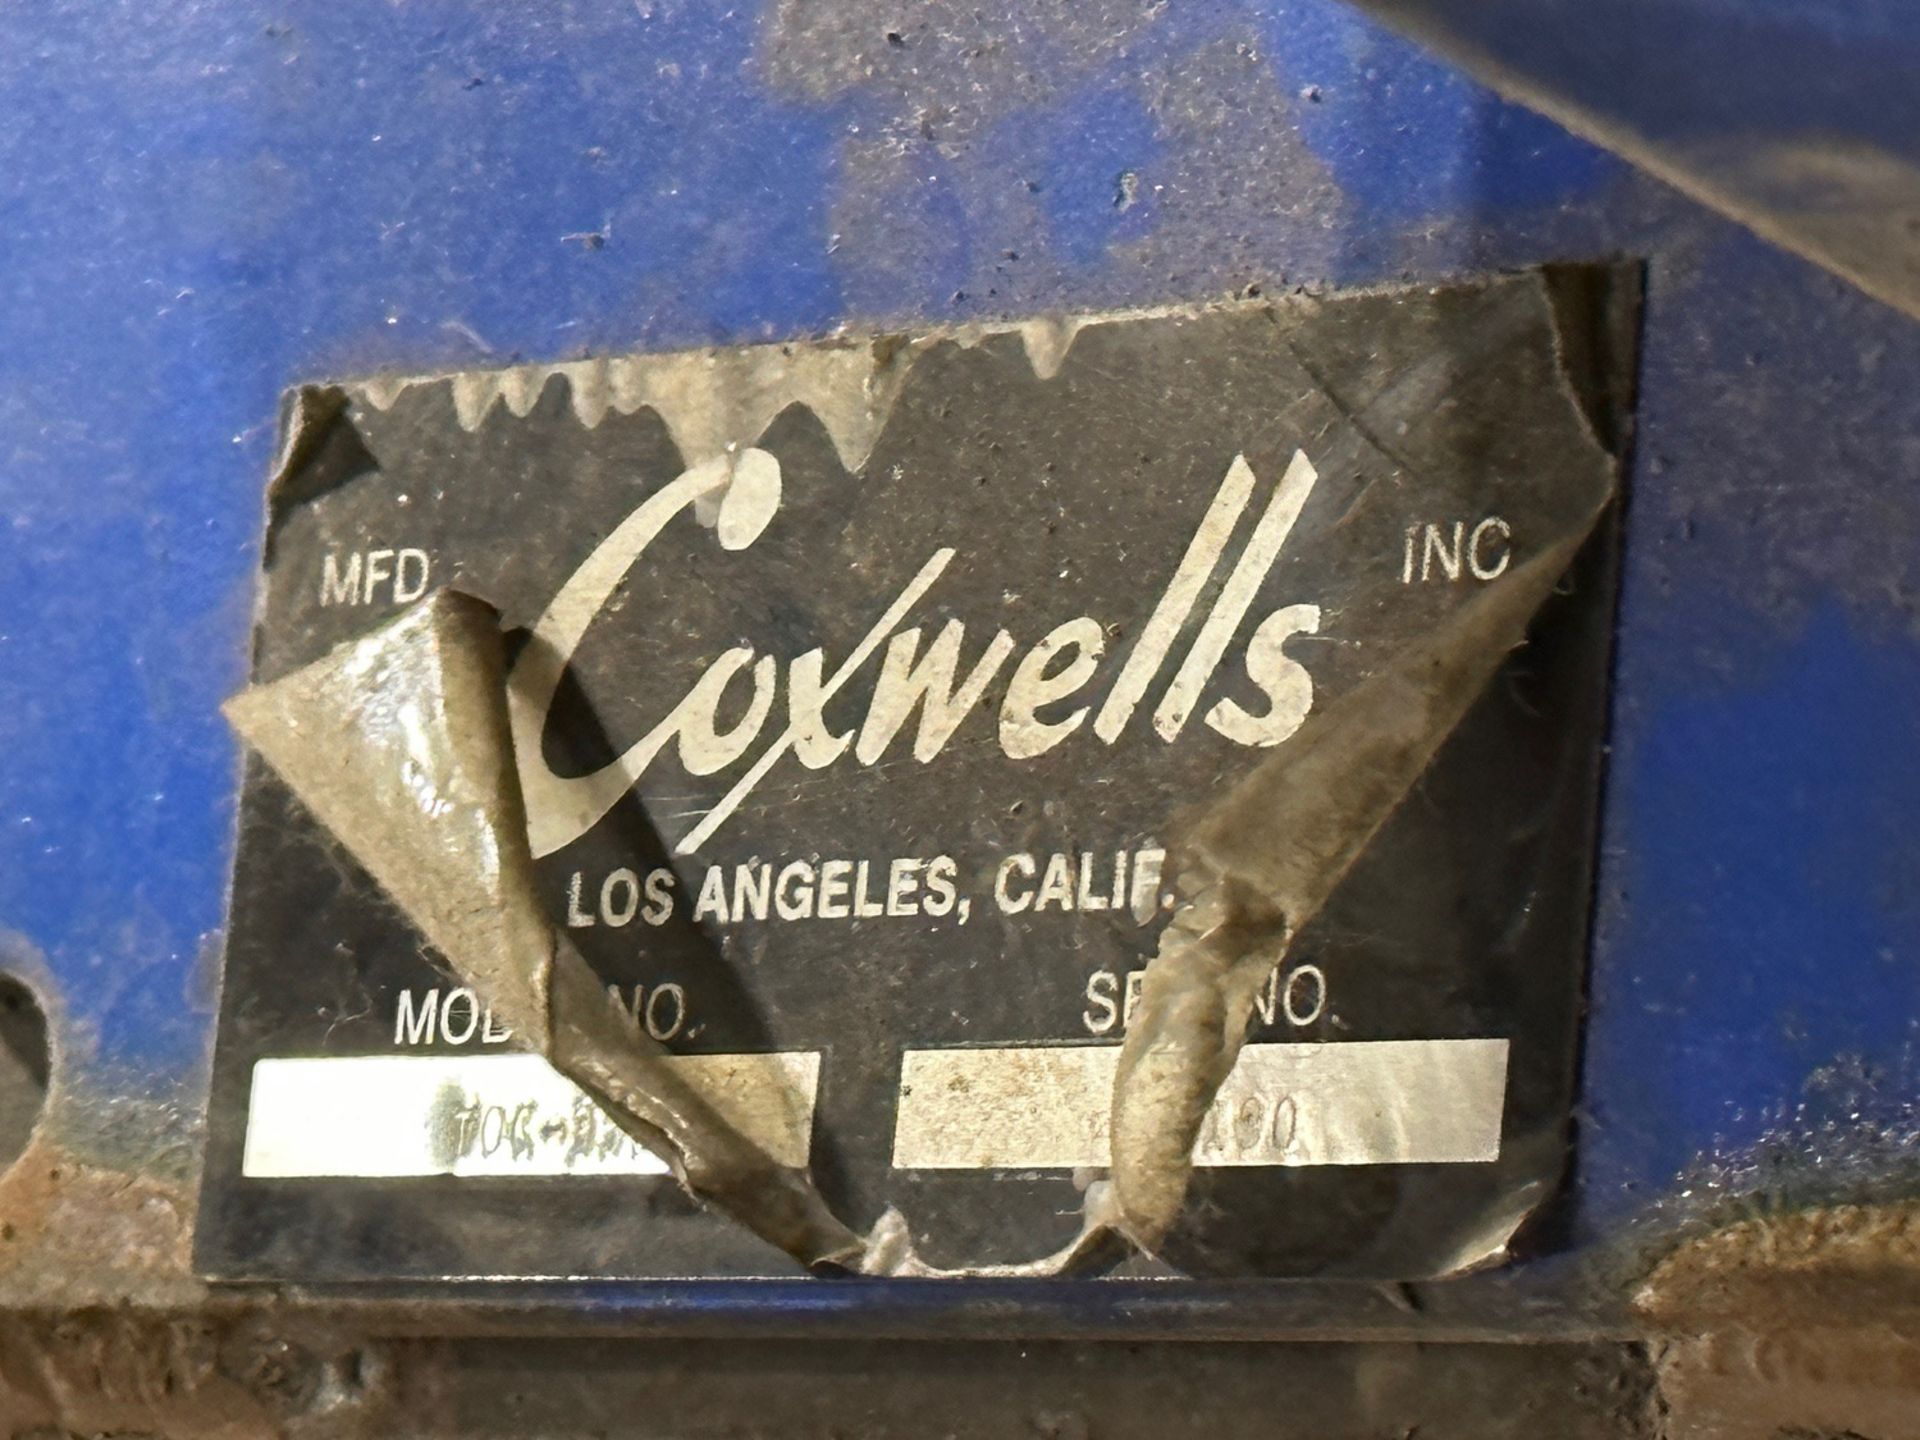 Coxwells Hose Reel | Rig Fee $85 - Image 2 of 2